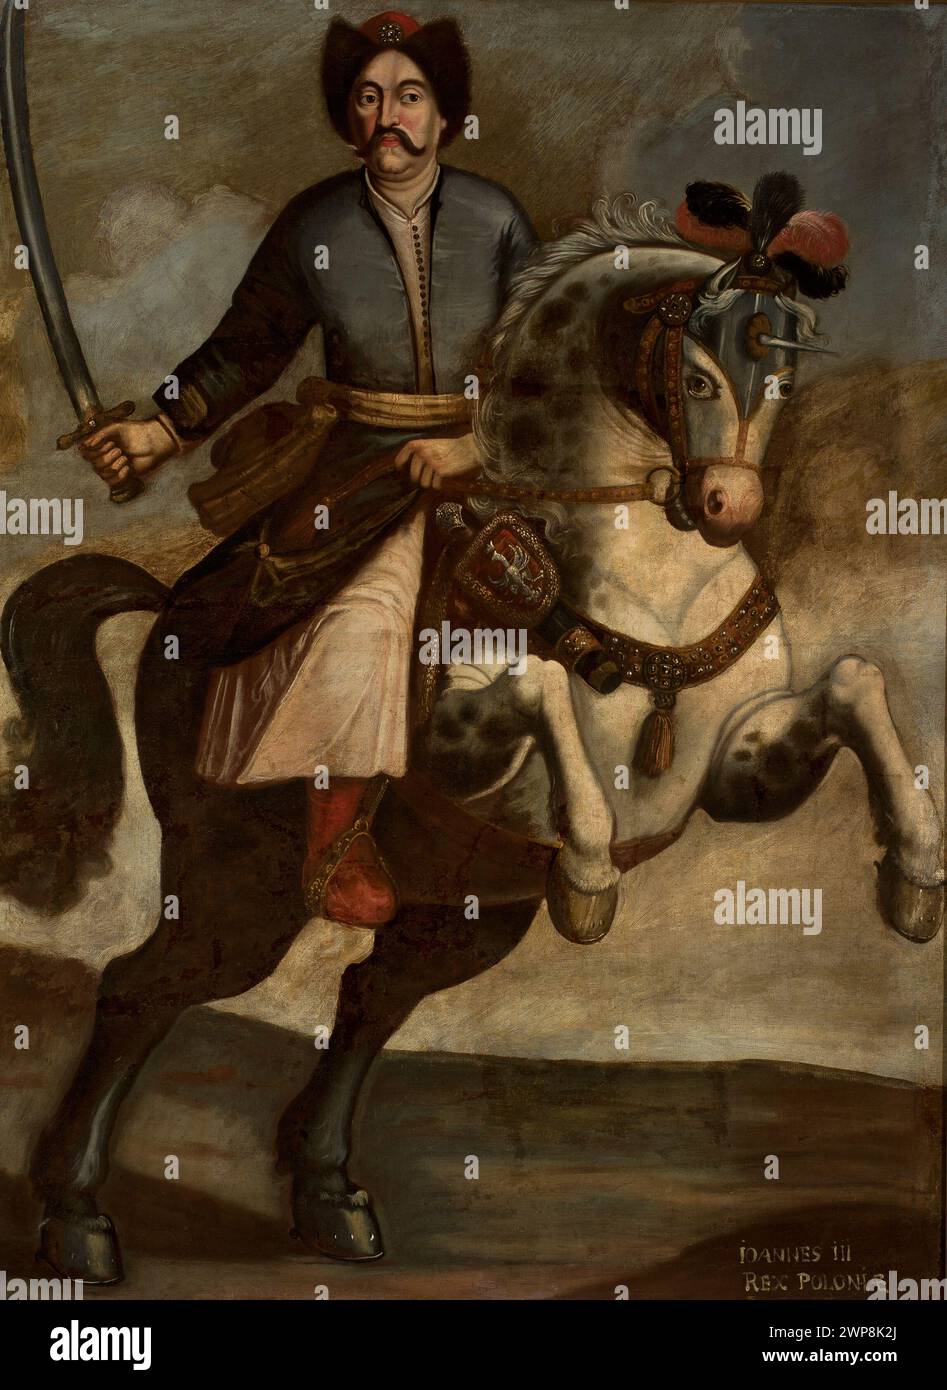 Portrait of Jan III Sobieski (1629-1696), King of Poland; unknown Polish painter; 2. PO. XVII century (1651-00-00-1700-00-00);Jan III Sobieski (King of Poland - 1629-1696) - iconography, Szwarc, Szymon (1884-1959) - collection, gift (provenance), horse portraits, Sarmatian costumes, sabers Stock Photo